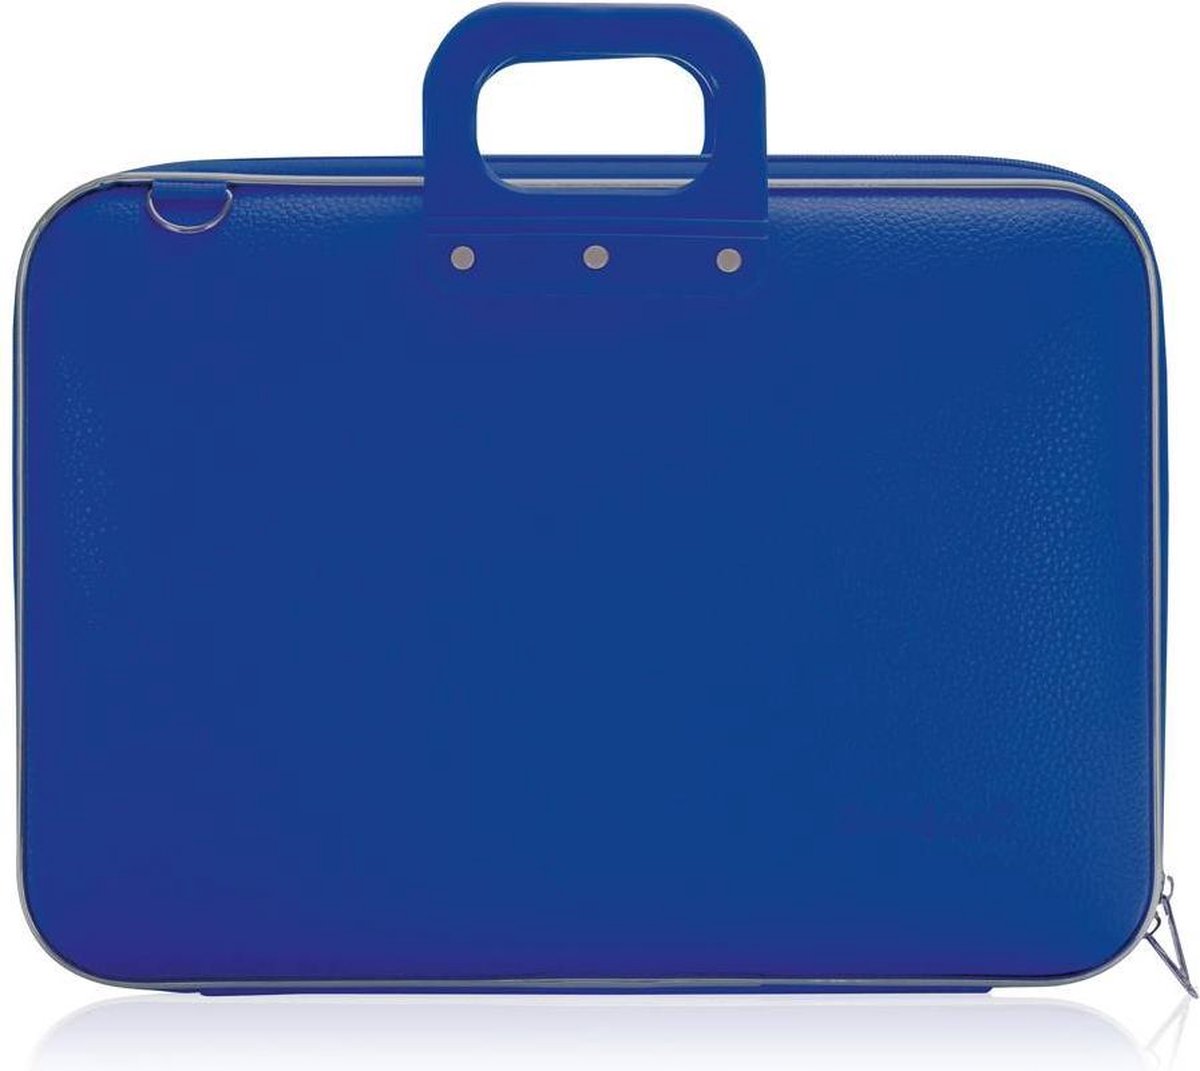 Bombata MAXI 17 inch Laptoptas Kobalt blauw